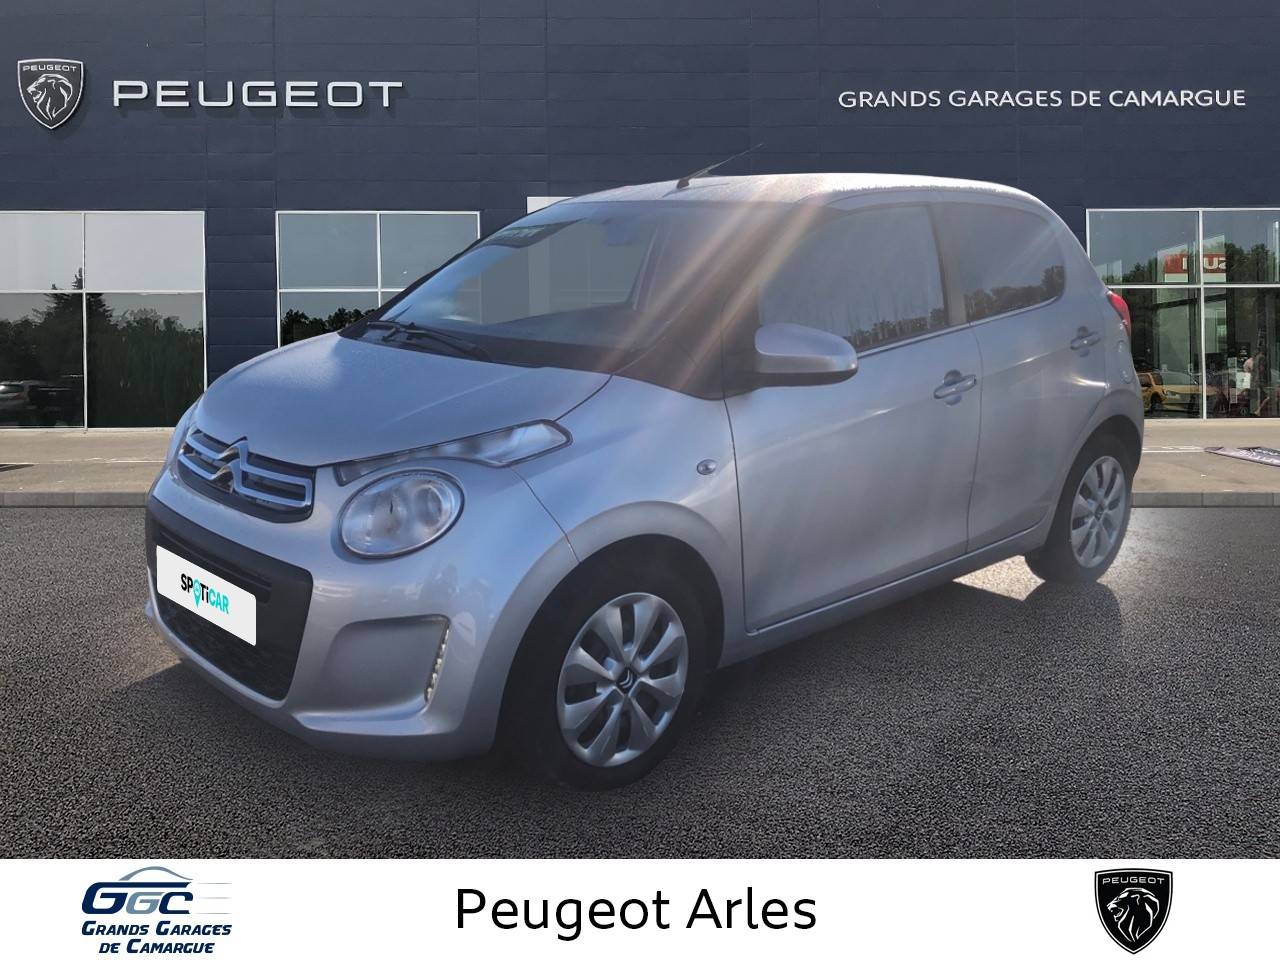 CITROEN C1 | C1 VTi 72 S&S occasion - Peugeot Arles